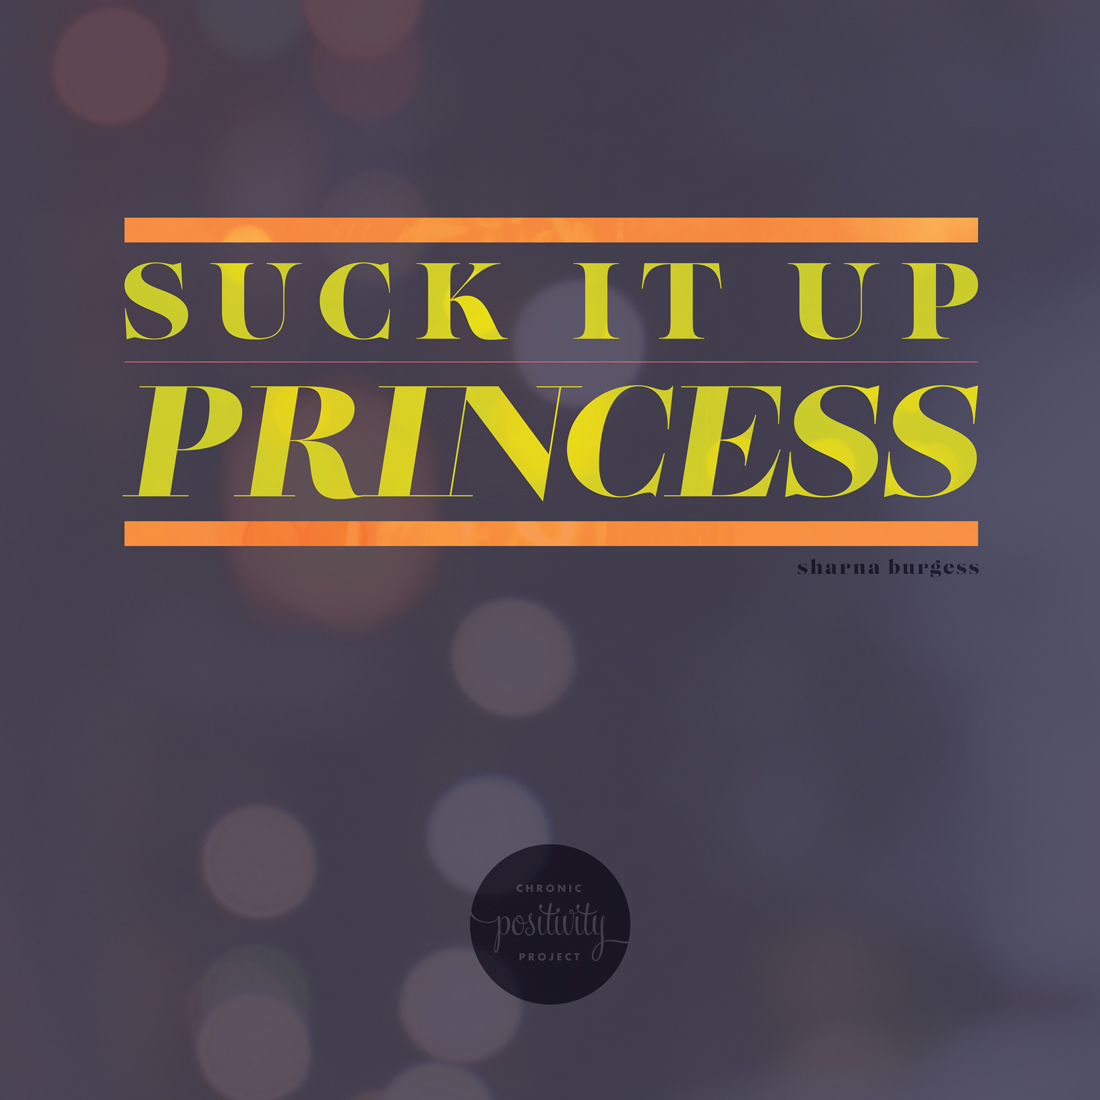 "Suck it up, princess" - Shonda Burgess